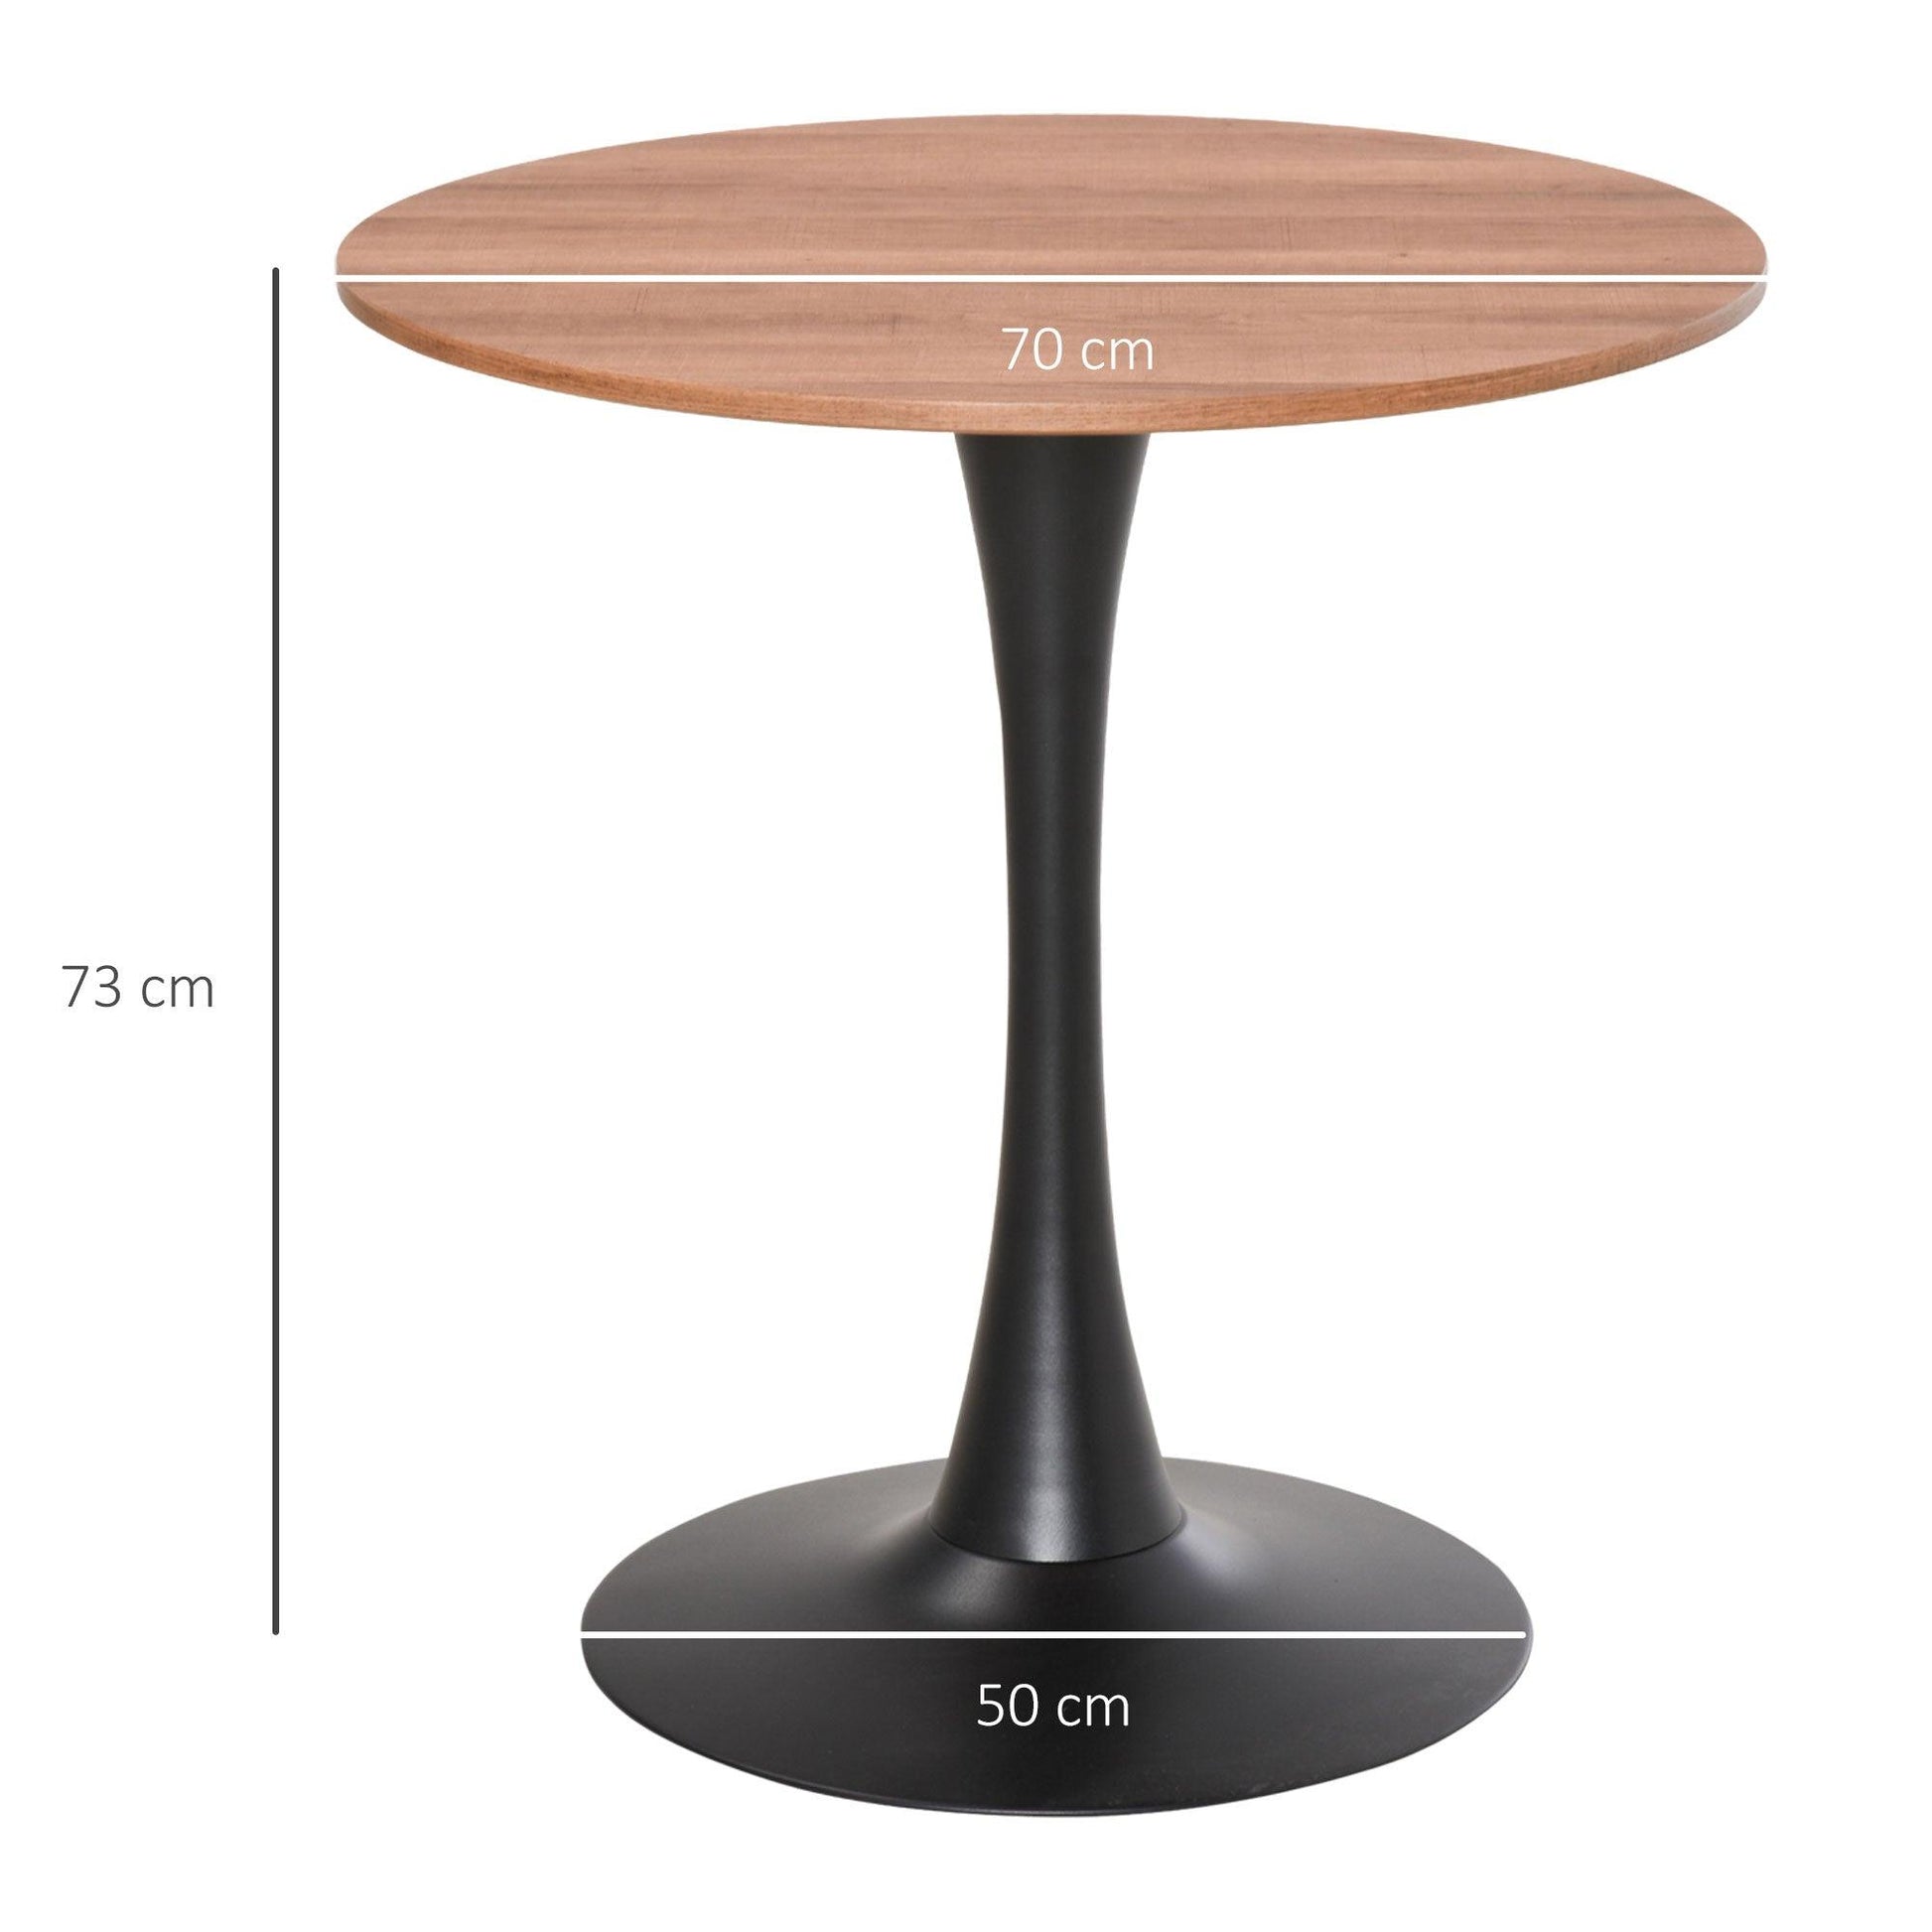 HOMCOM Modern Round Dining Table with Metal Base - Brown - ALL4U RETAILER LTD